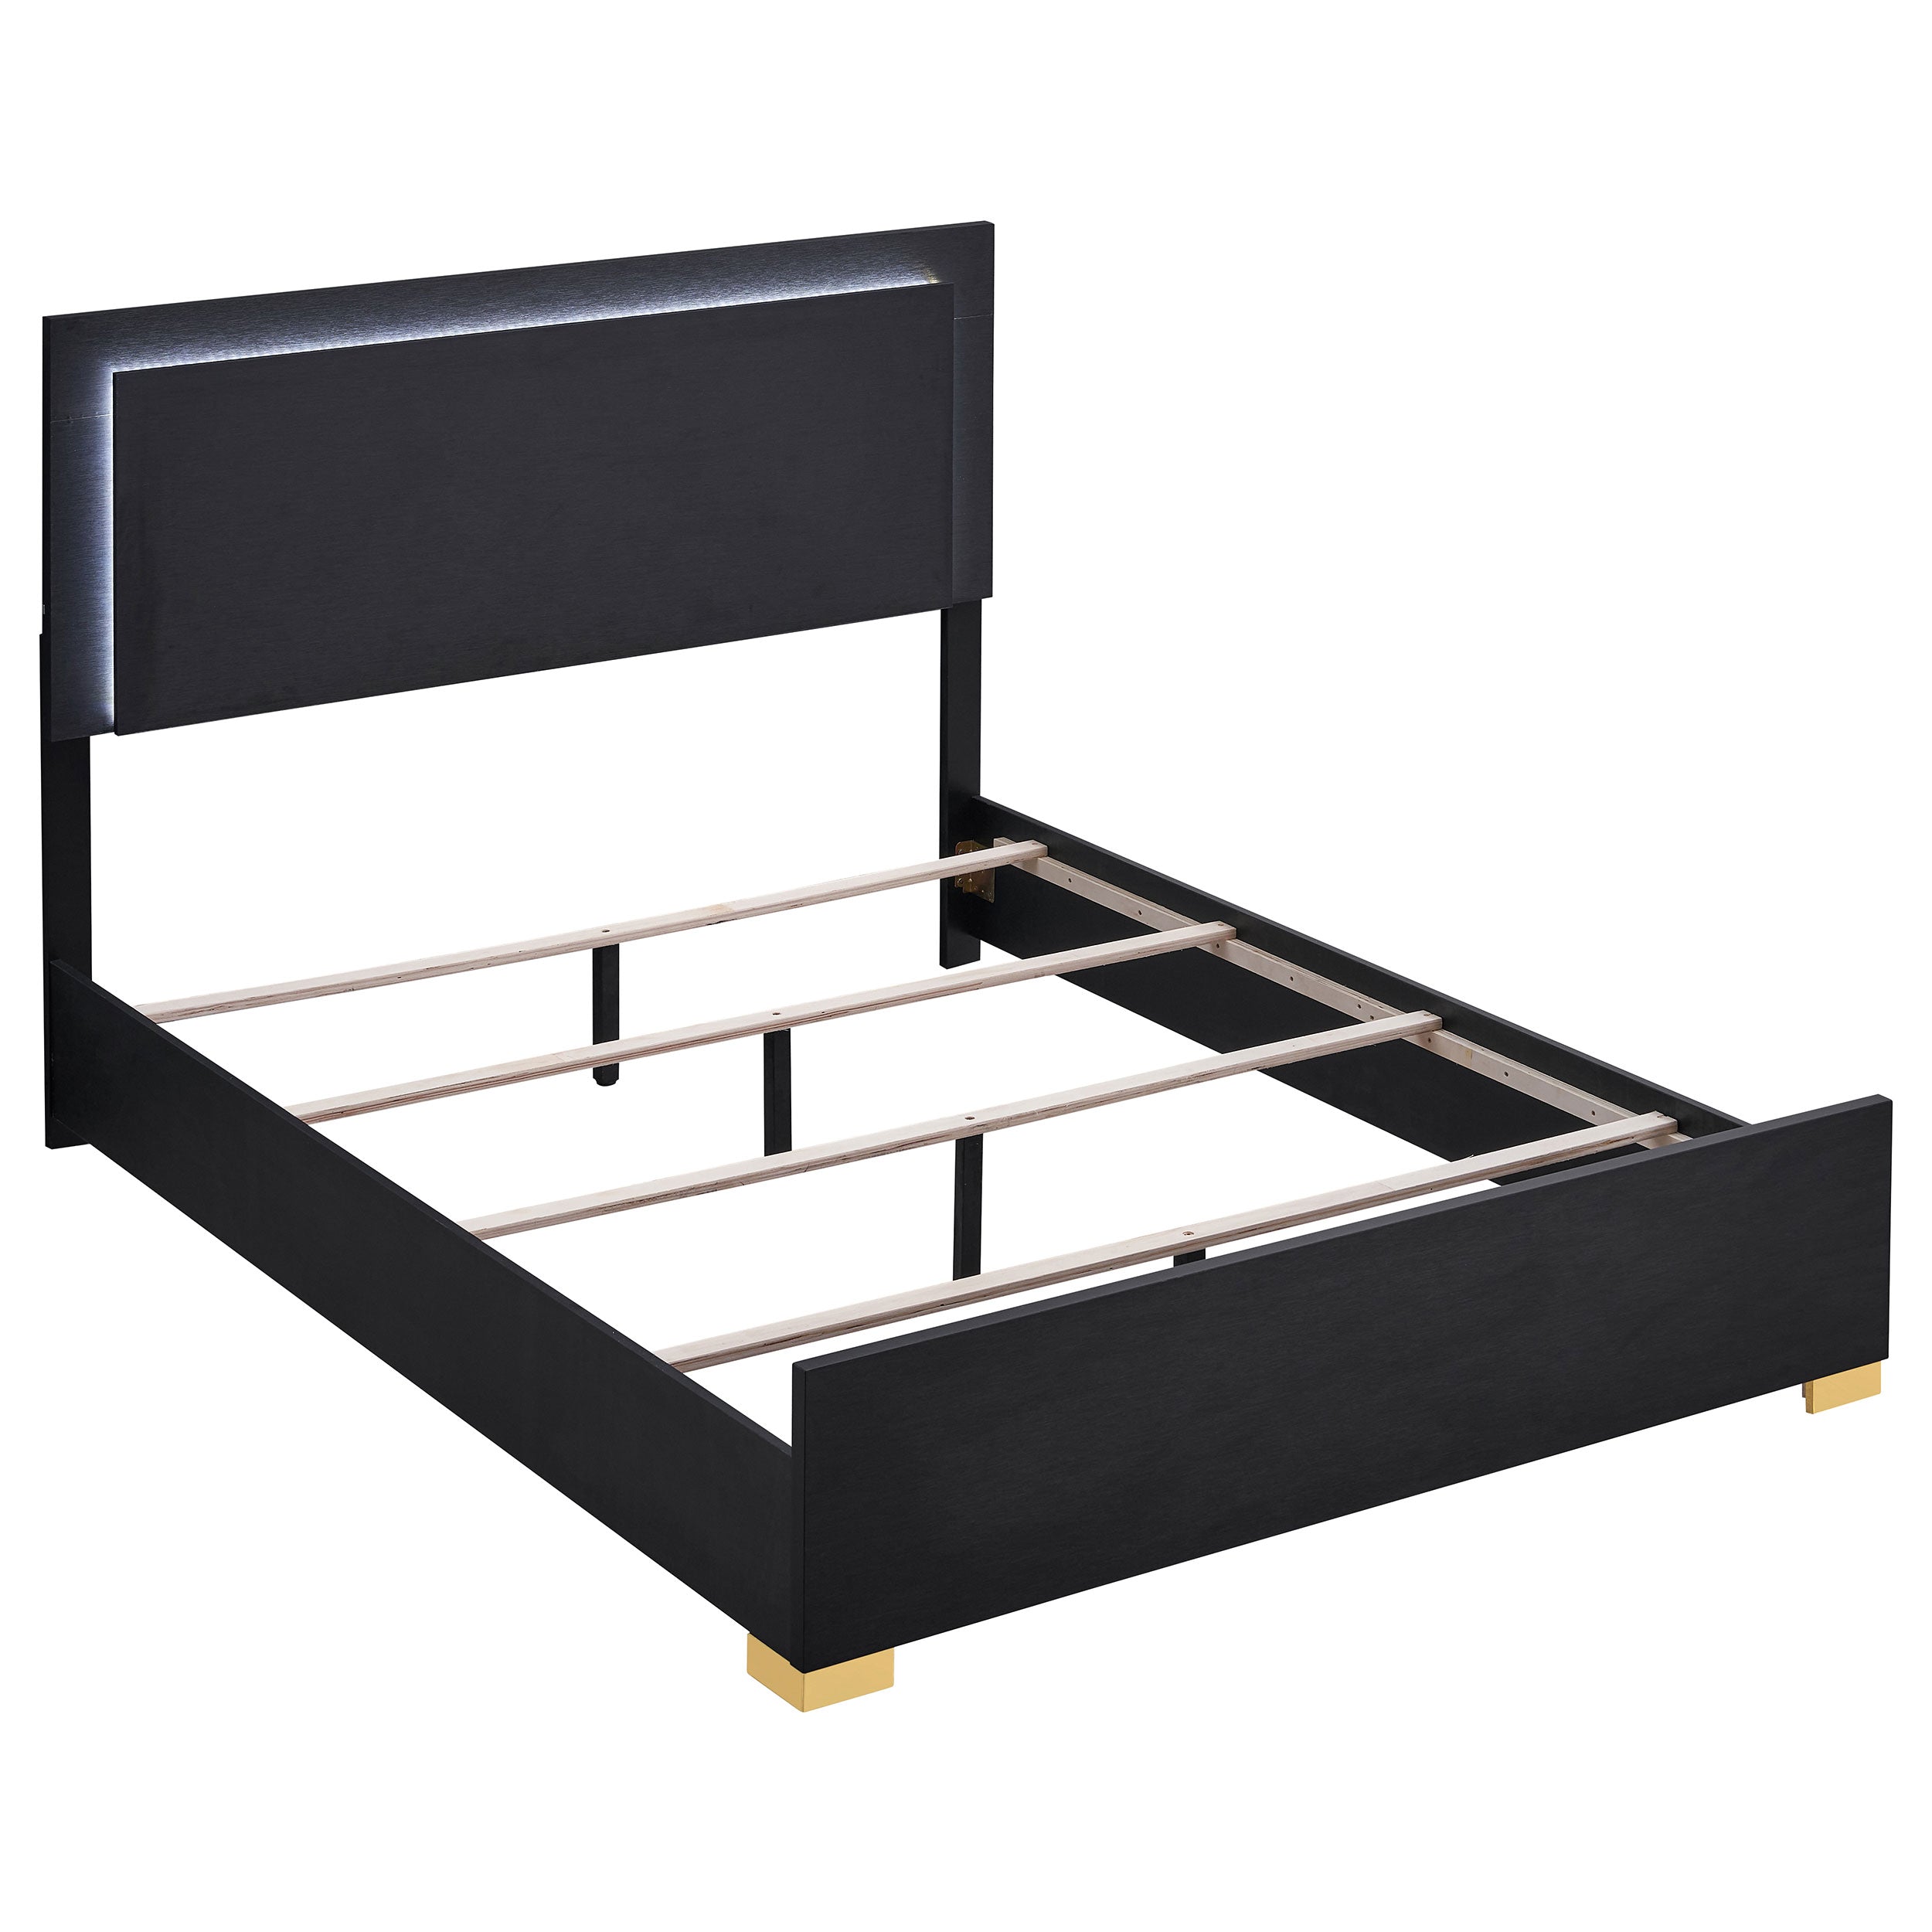 Marceline Bedroom Set - Luxury Home Furniture (MI)